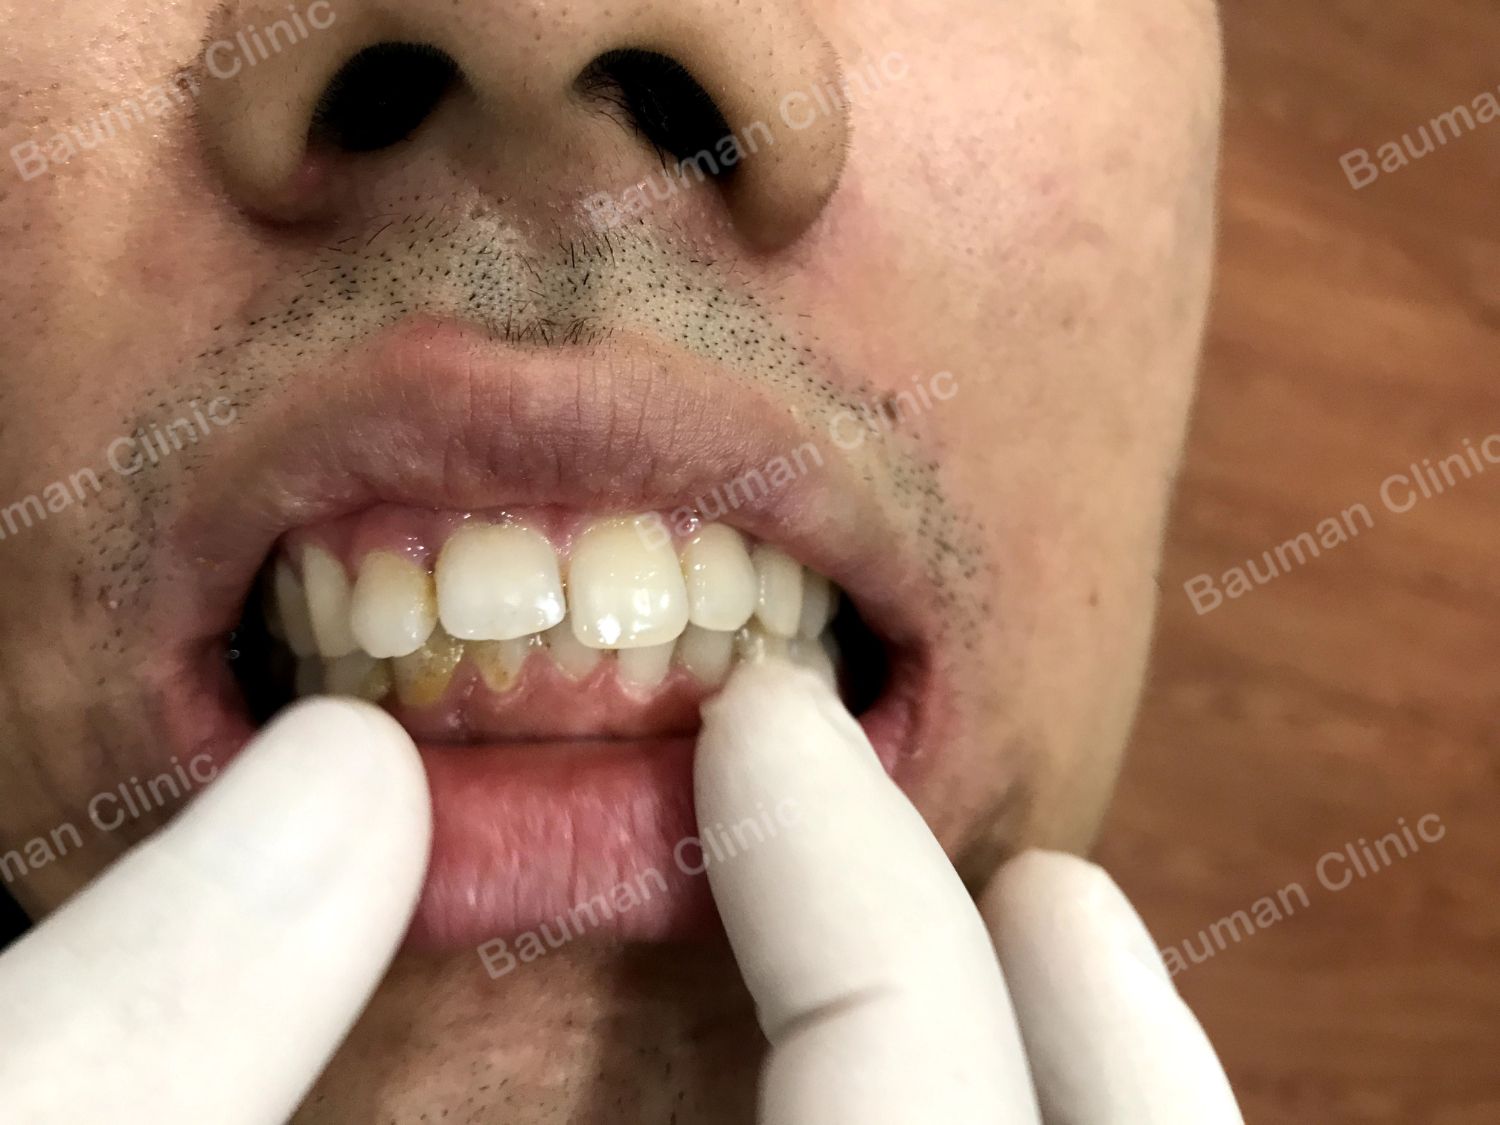 Ca niềng răng số 5017 - Nha khoa Bauman Clinic